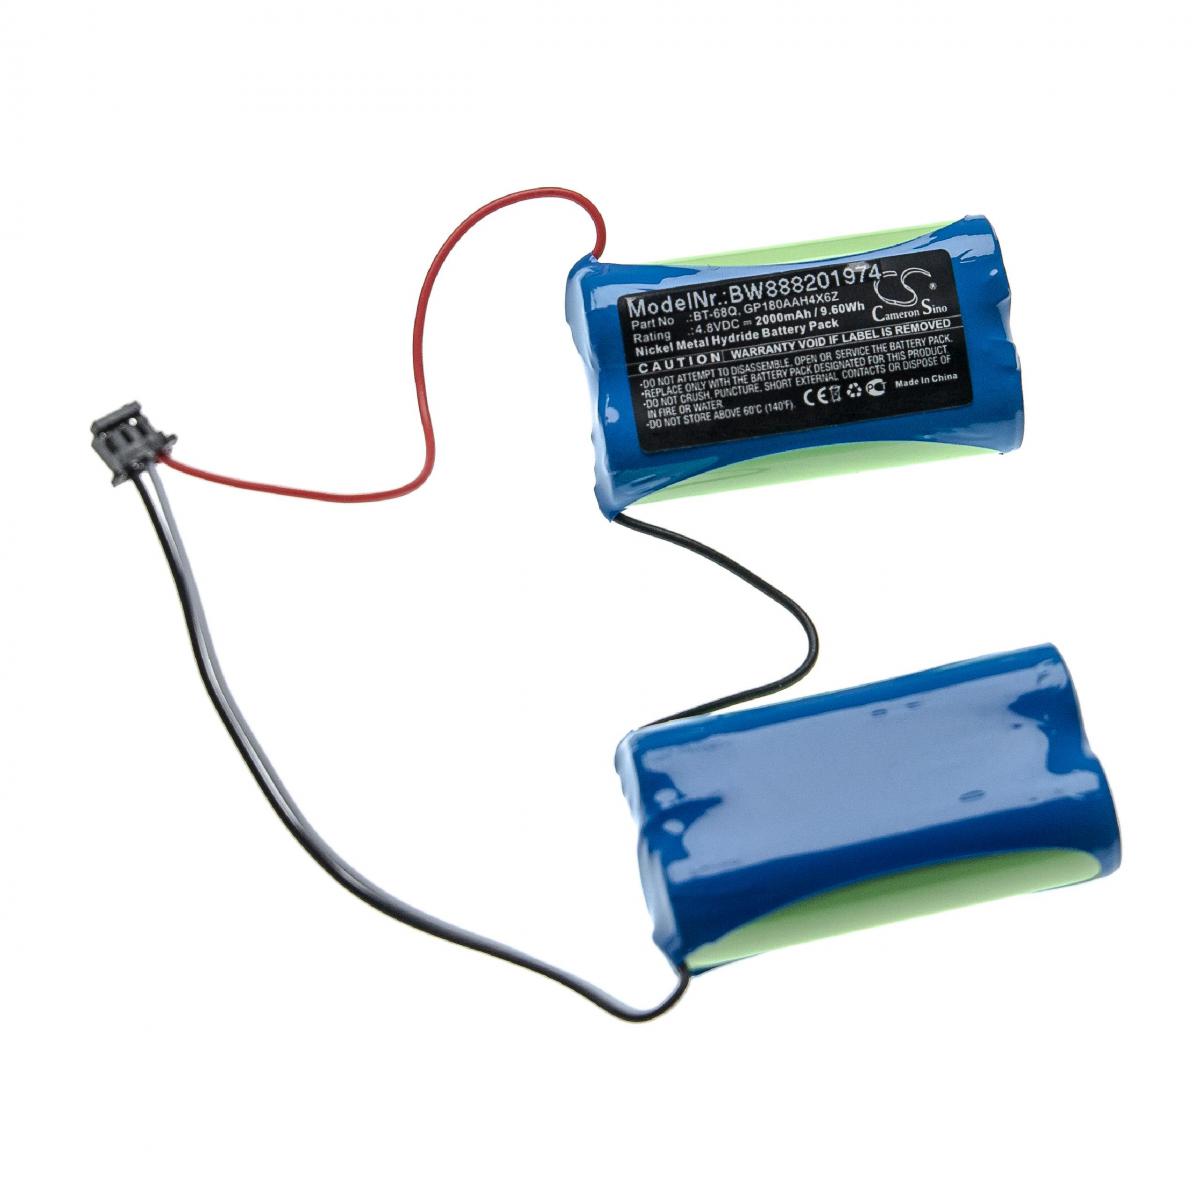 Vhbw - vhbw Batterie compatible avec Topcon LS-B100, LS-B100 Machine Control Laser, LS-B110 outil de mesure (2000mAh, 4,8V, NiMH) - Piles rechargeables